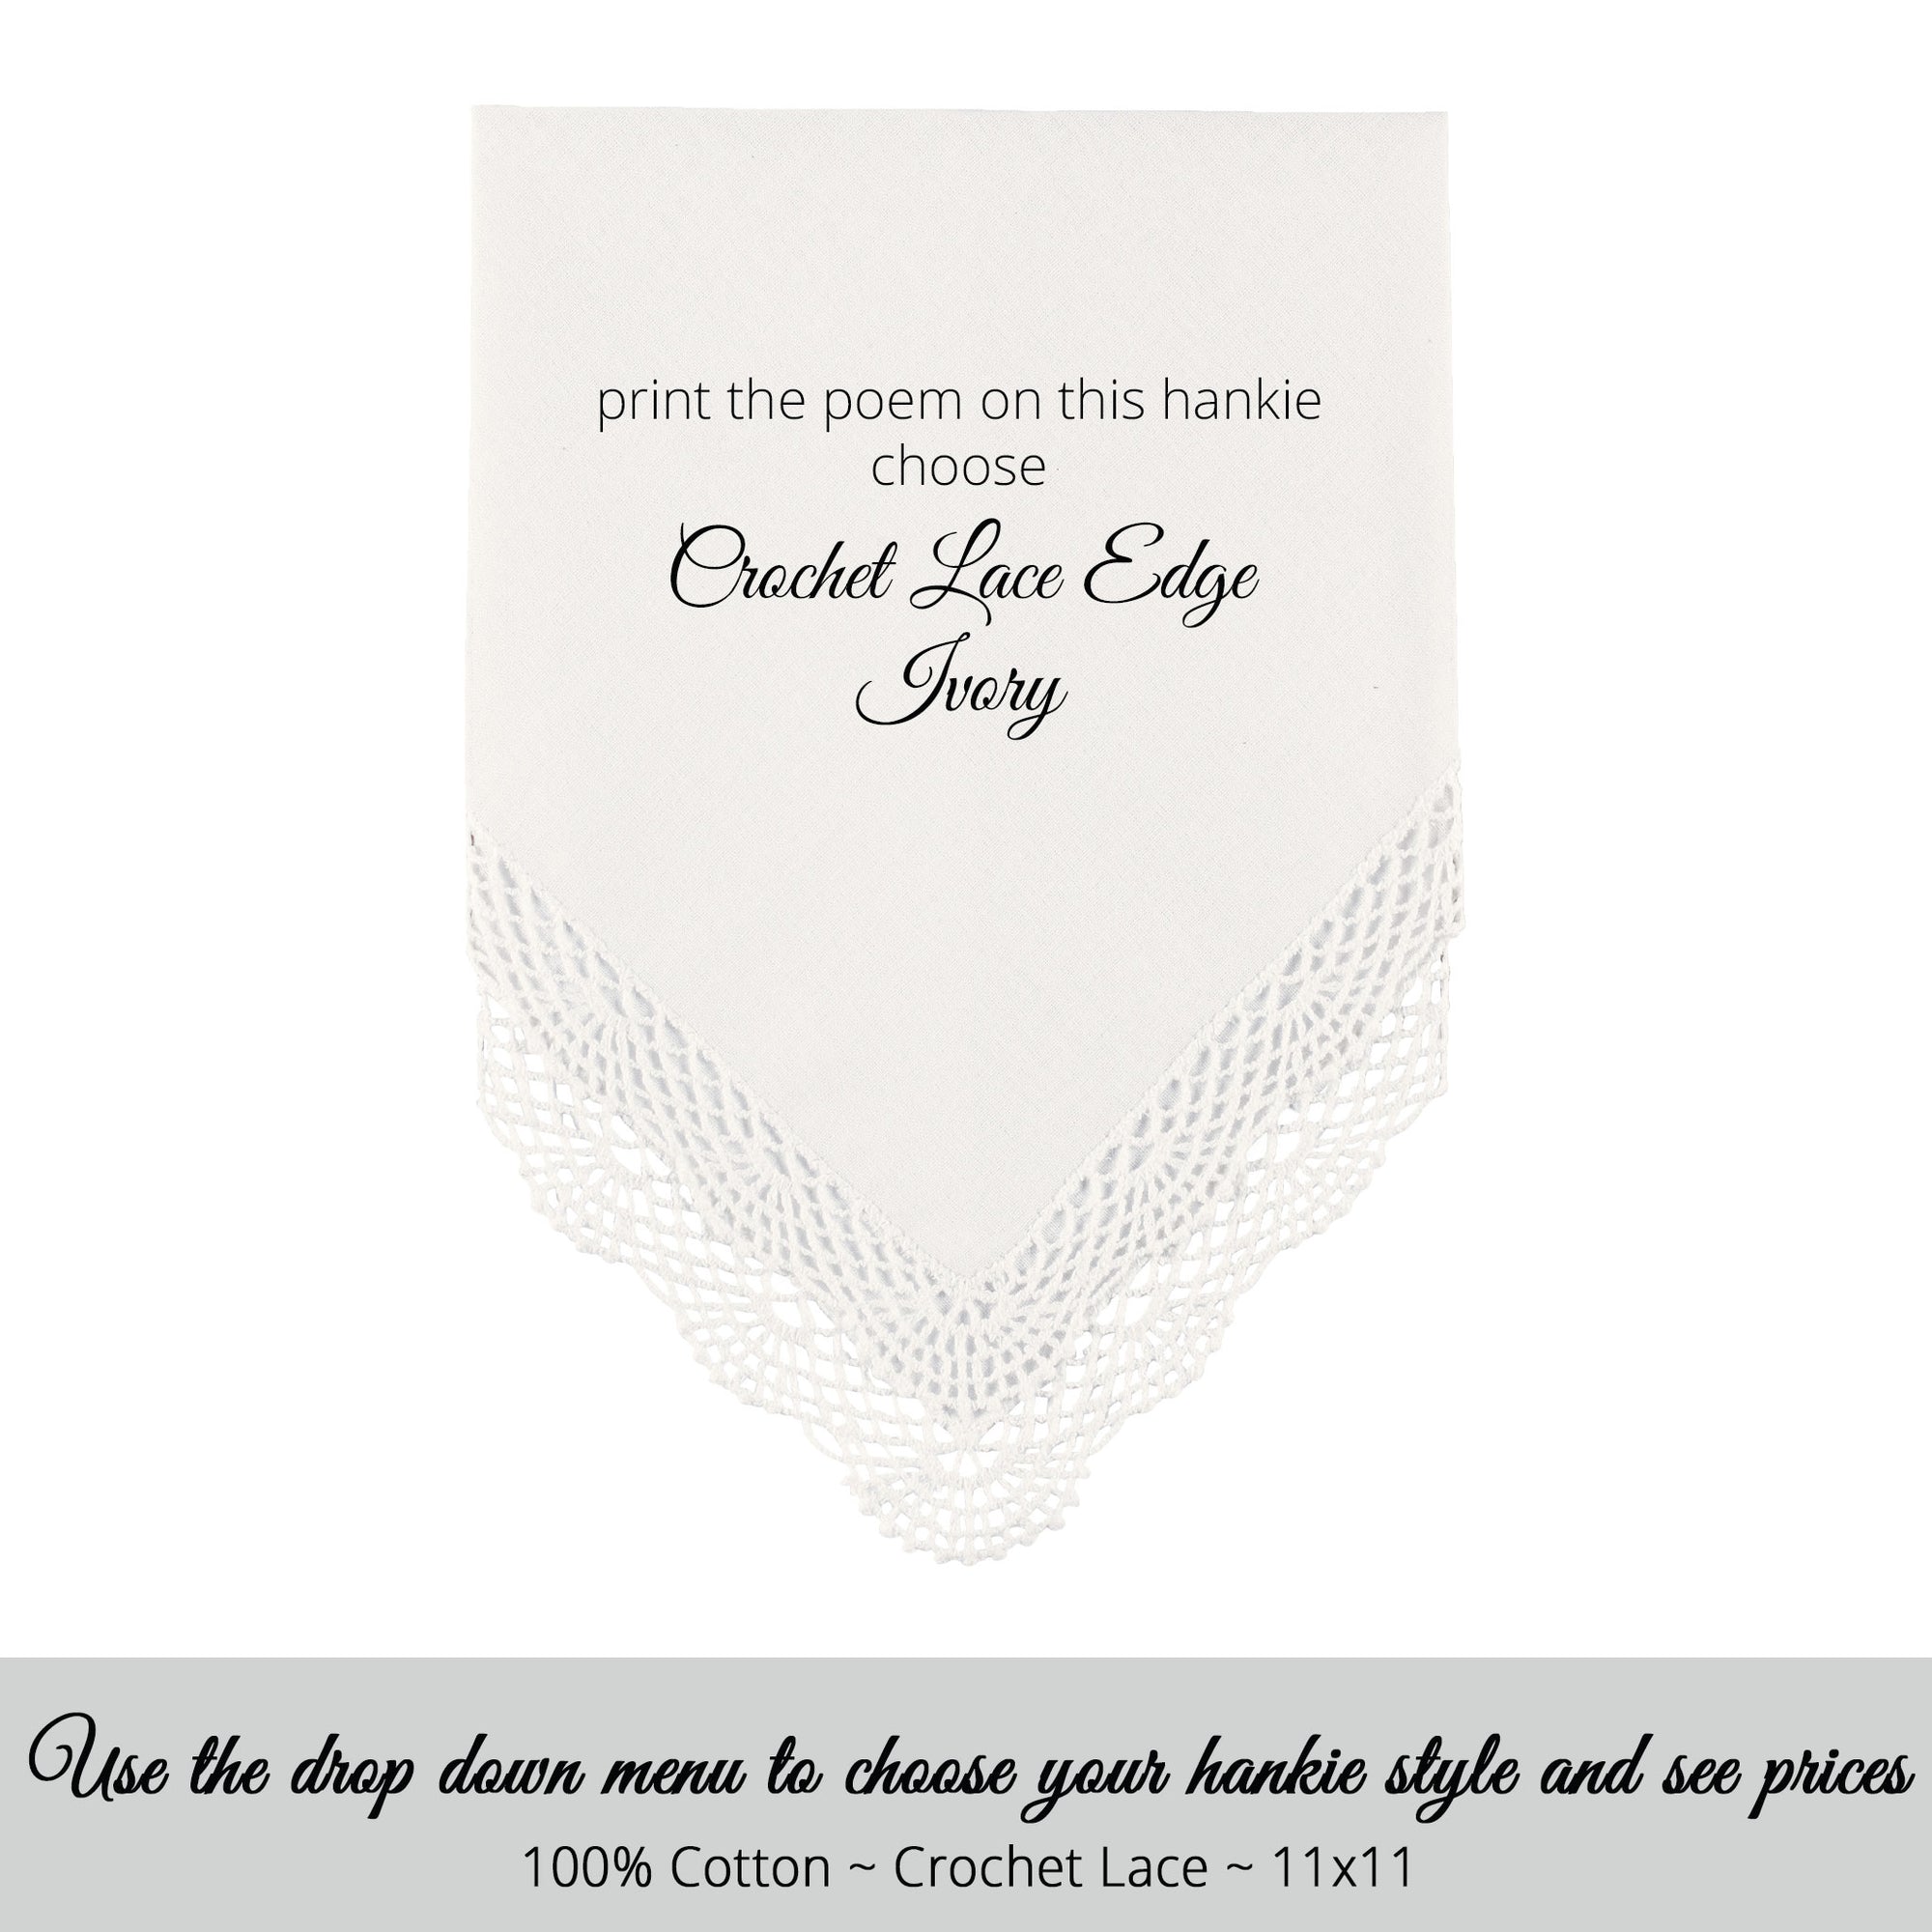 Wedding handkerchief ivory with crochet lace edge poem printed hankie